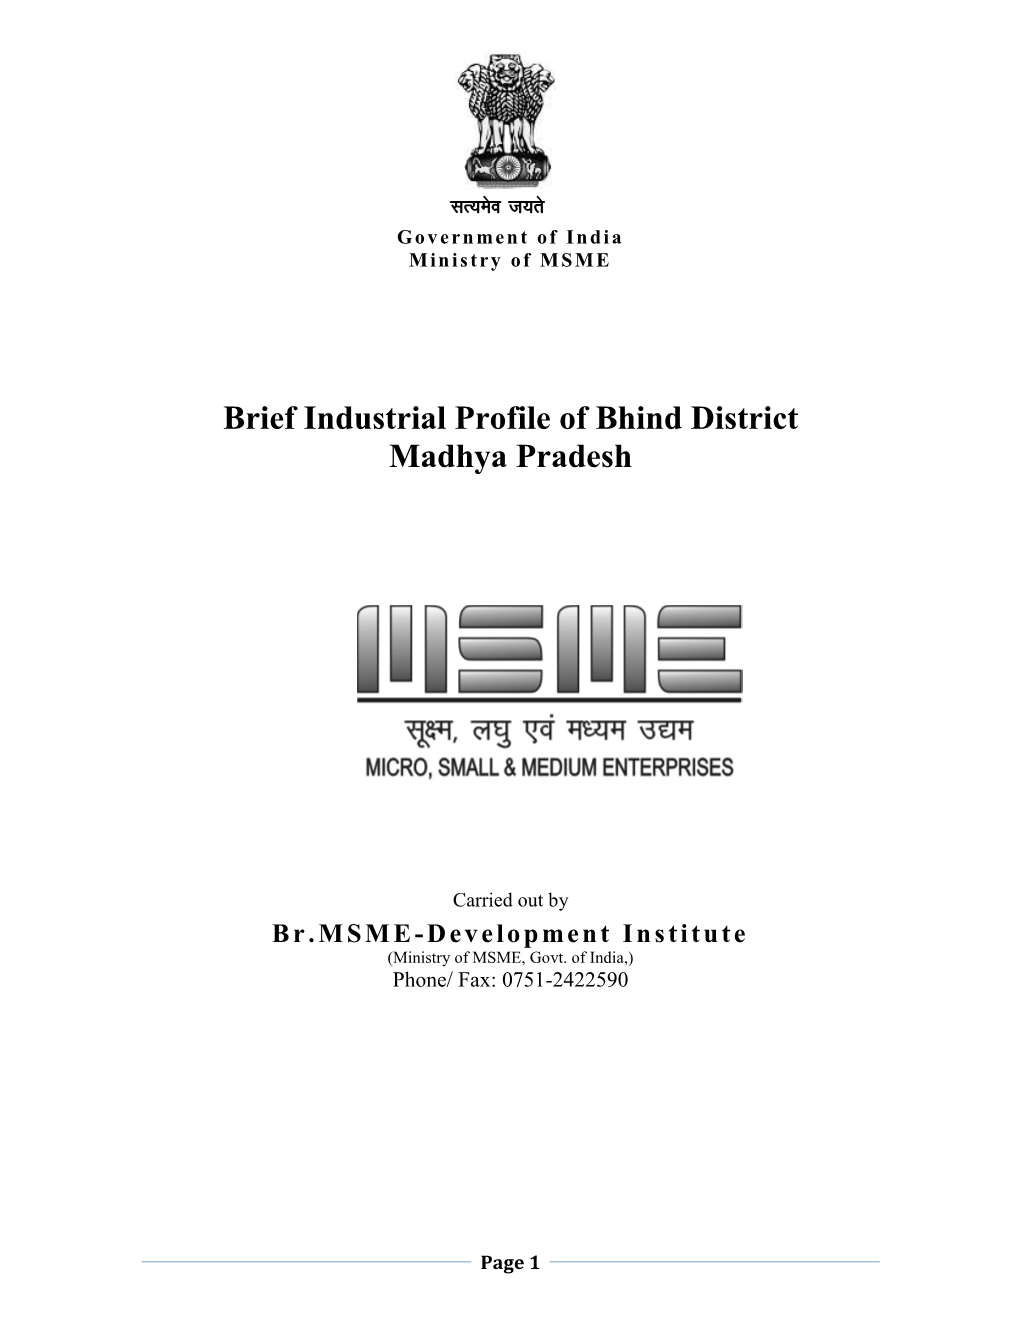 Brief Industrial Profile of Bhind District Madhya Pradesh